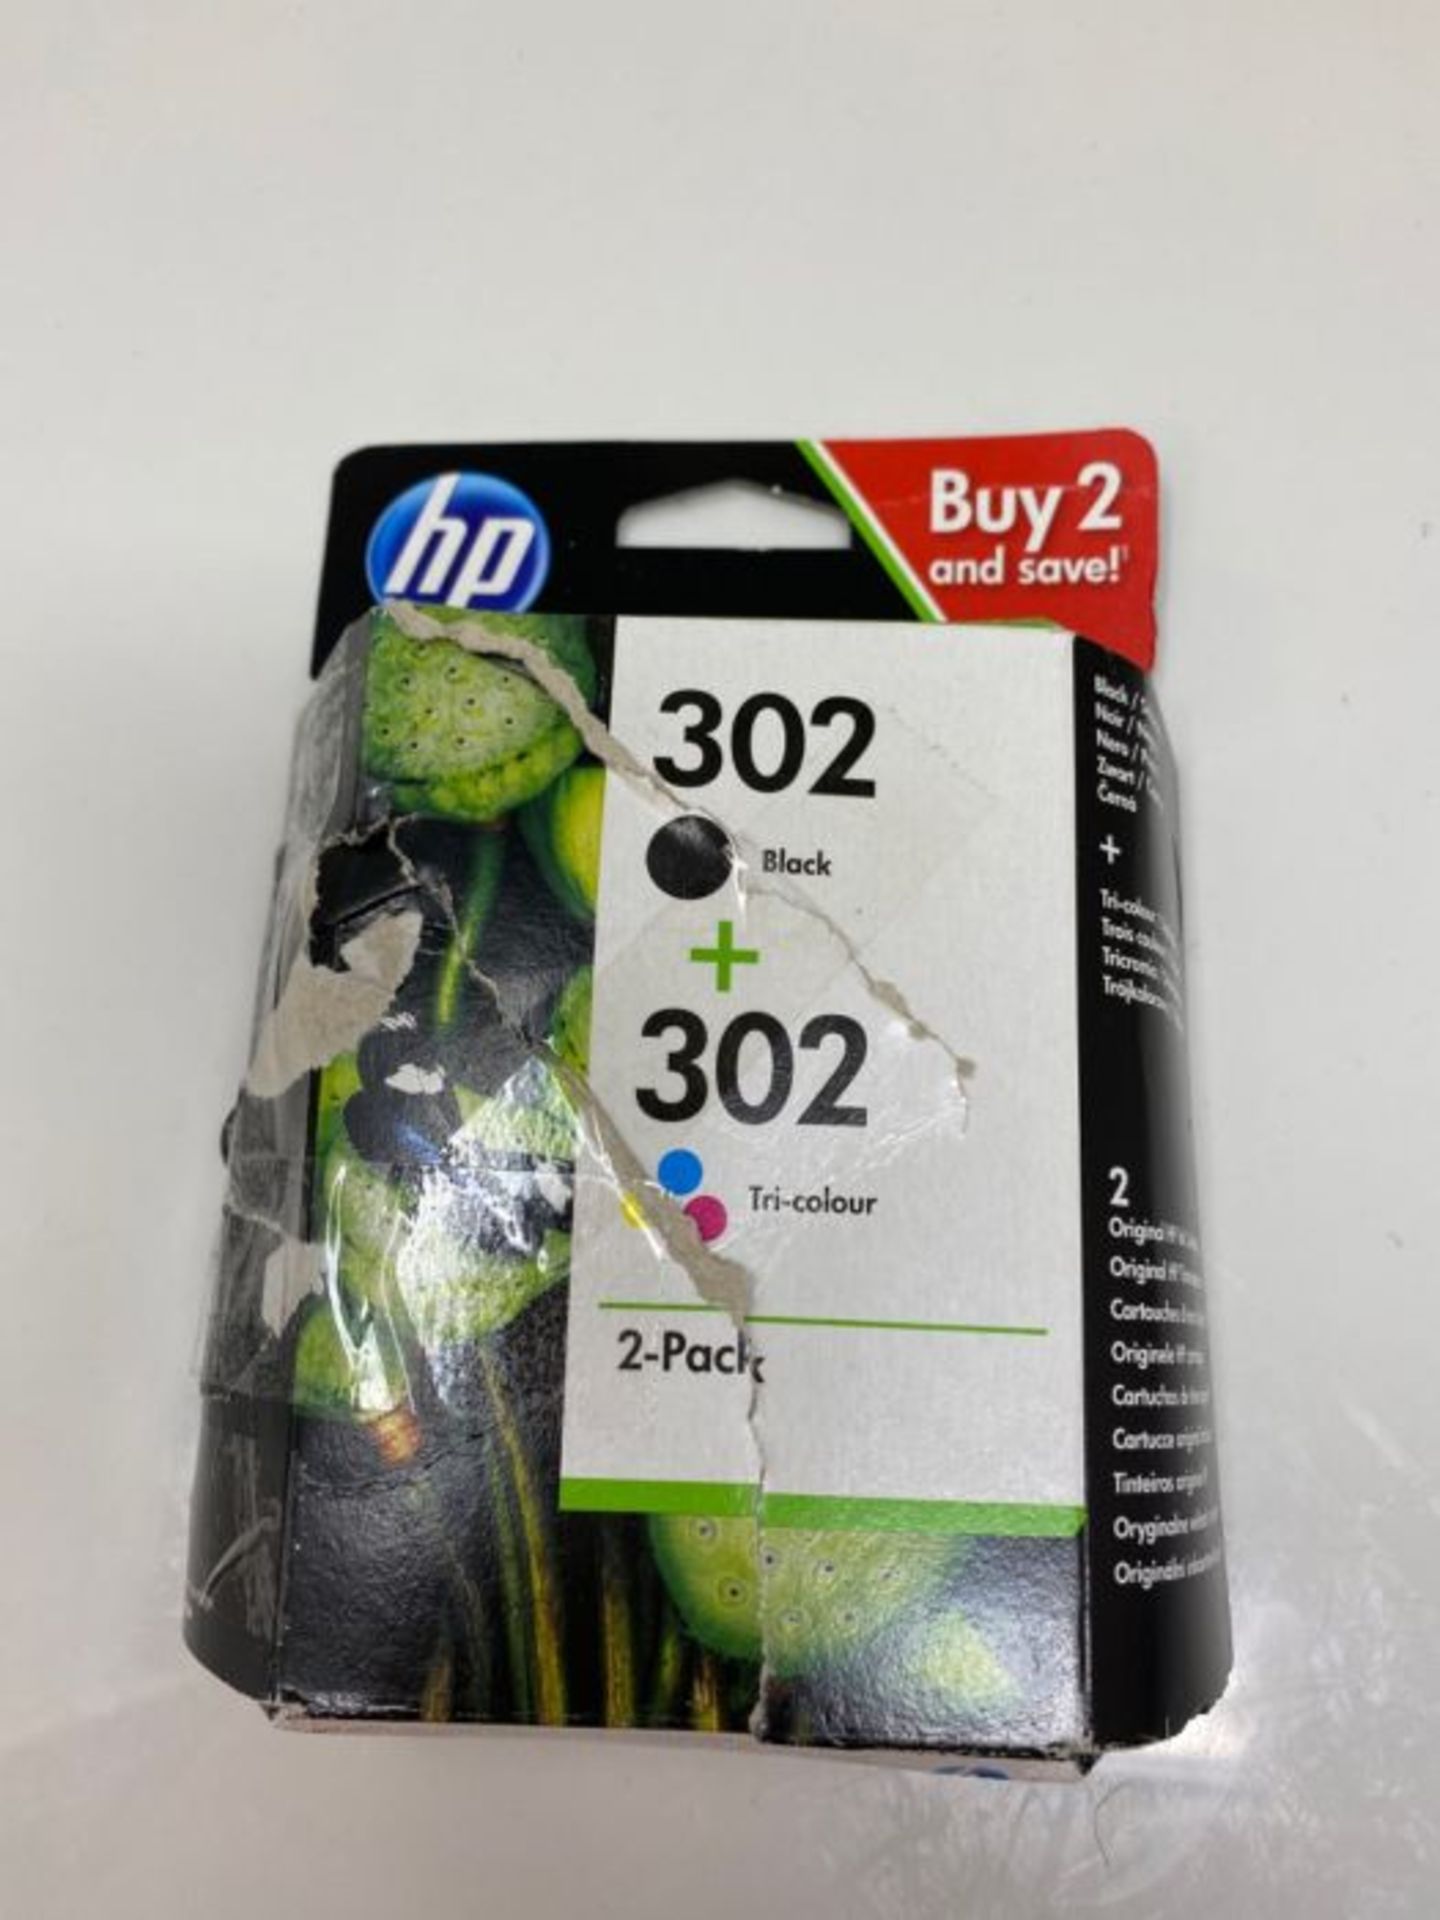 HP X4D37AE 302 Original Ink Cartridges, Black and Tri-colour, Multipack - Image 2 of 2